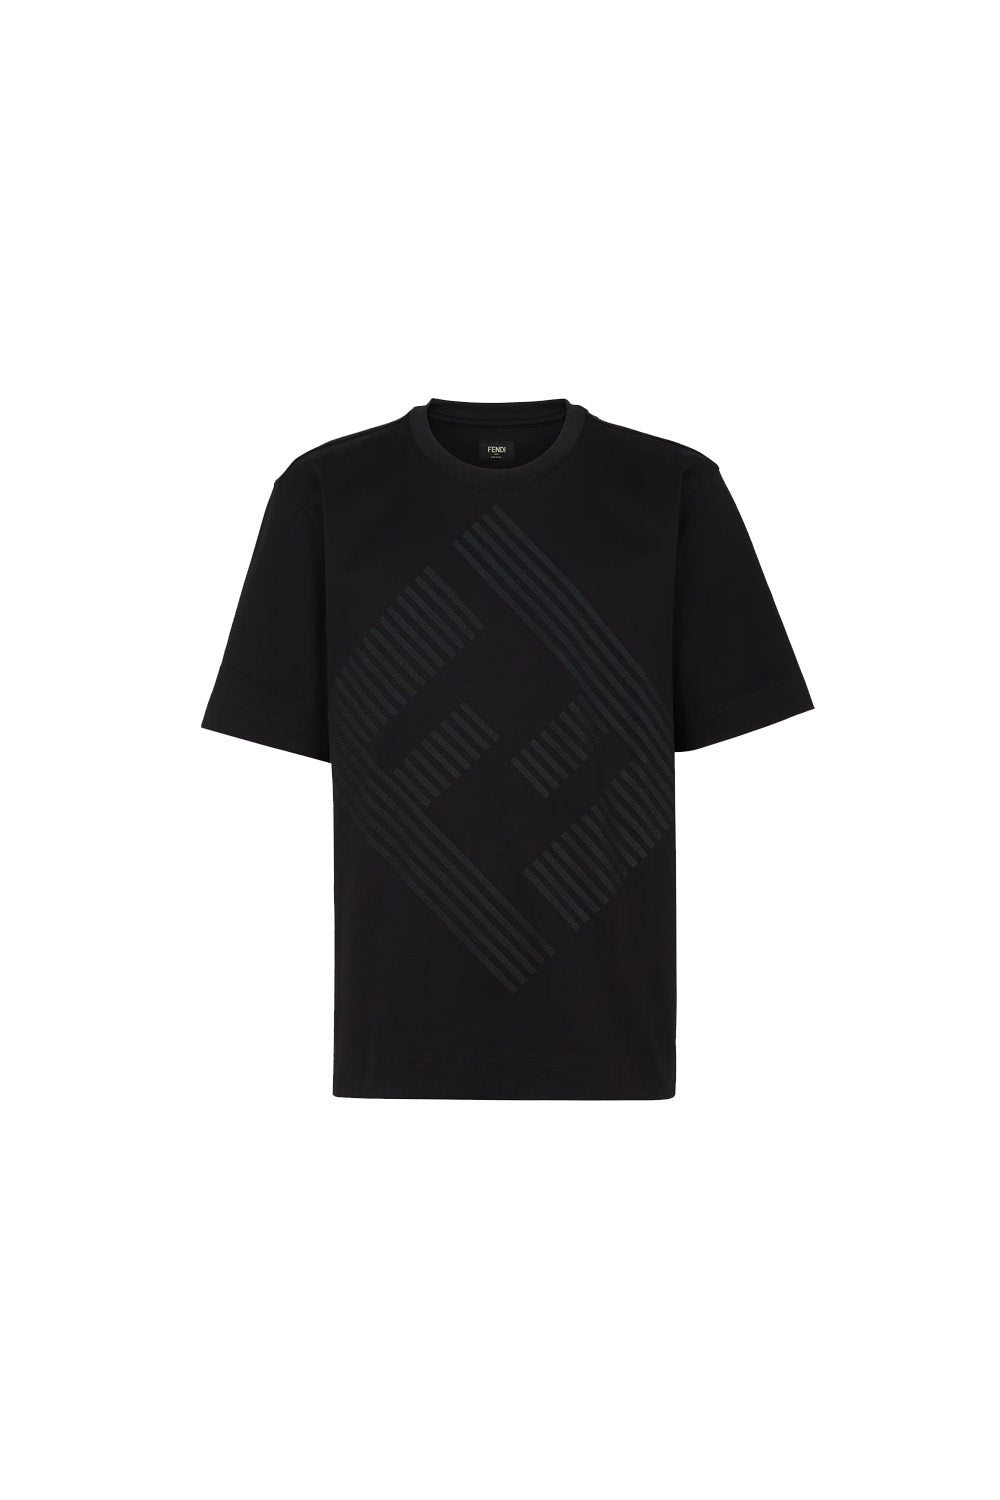 Fendi Logo Shadow Black Crewneck T-Shirt